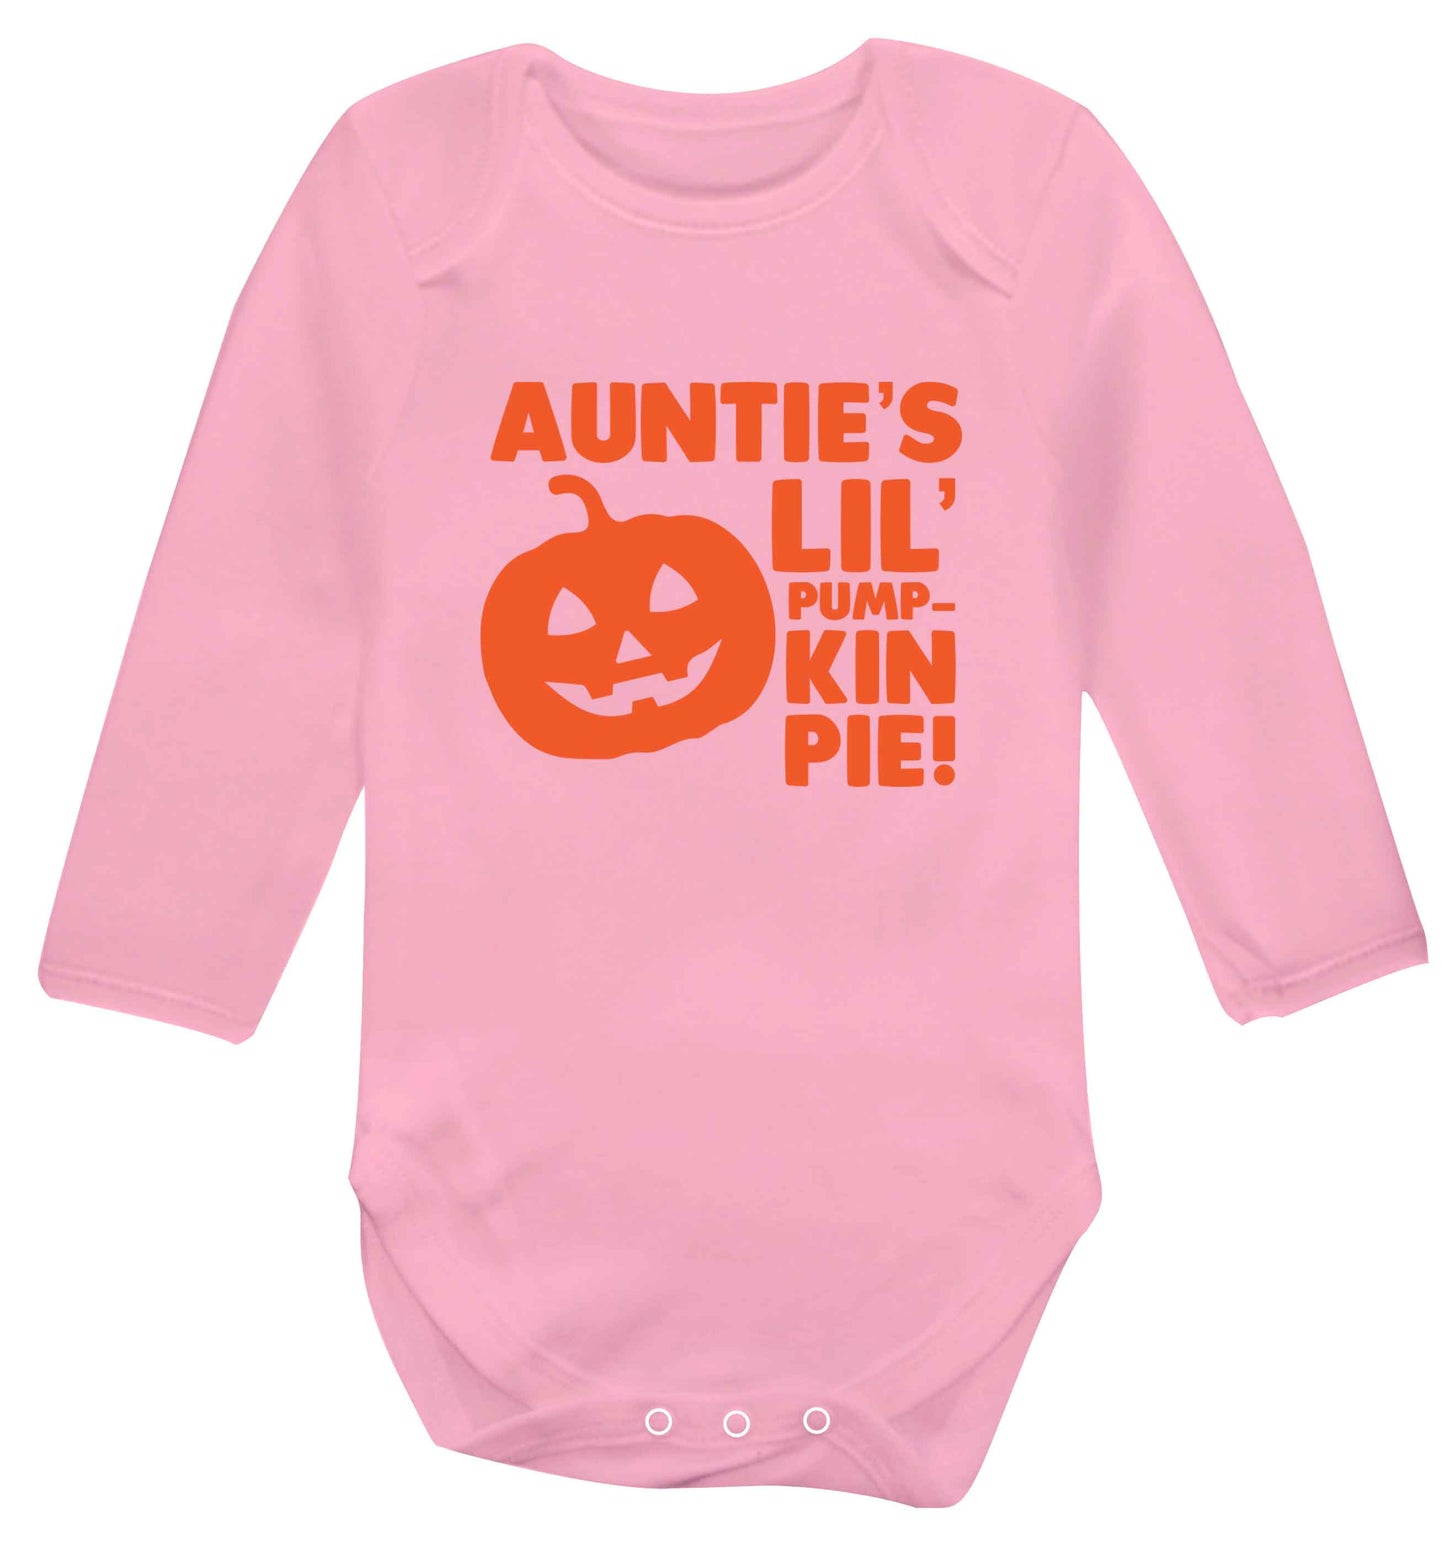 Auntie's lil' pumpkin pie baby vest long sleeved pale pink 6-12 months